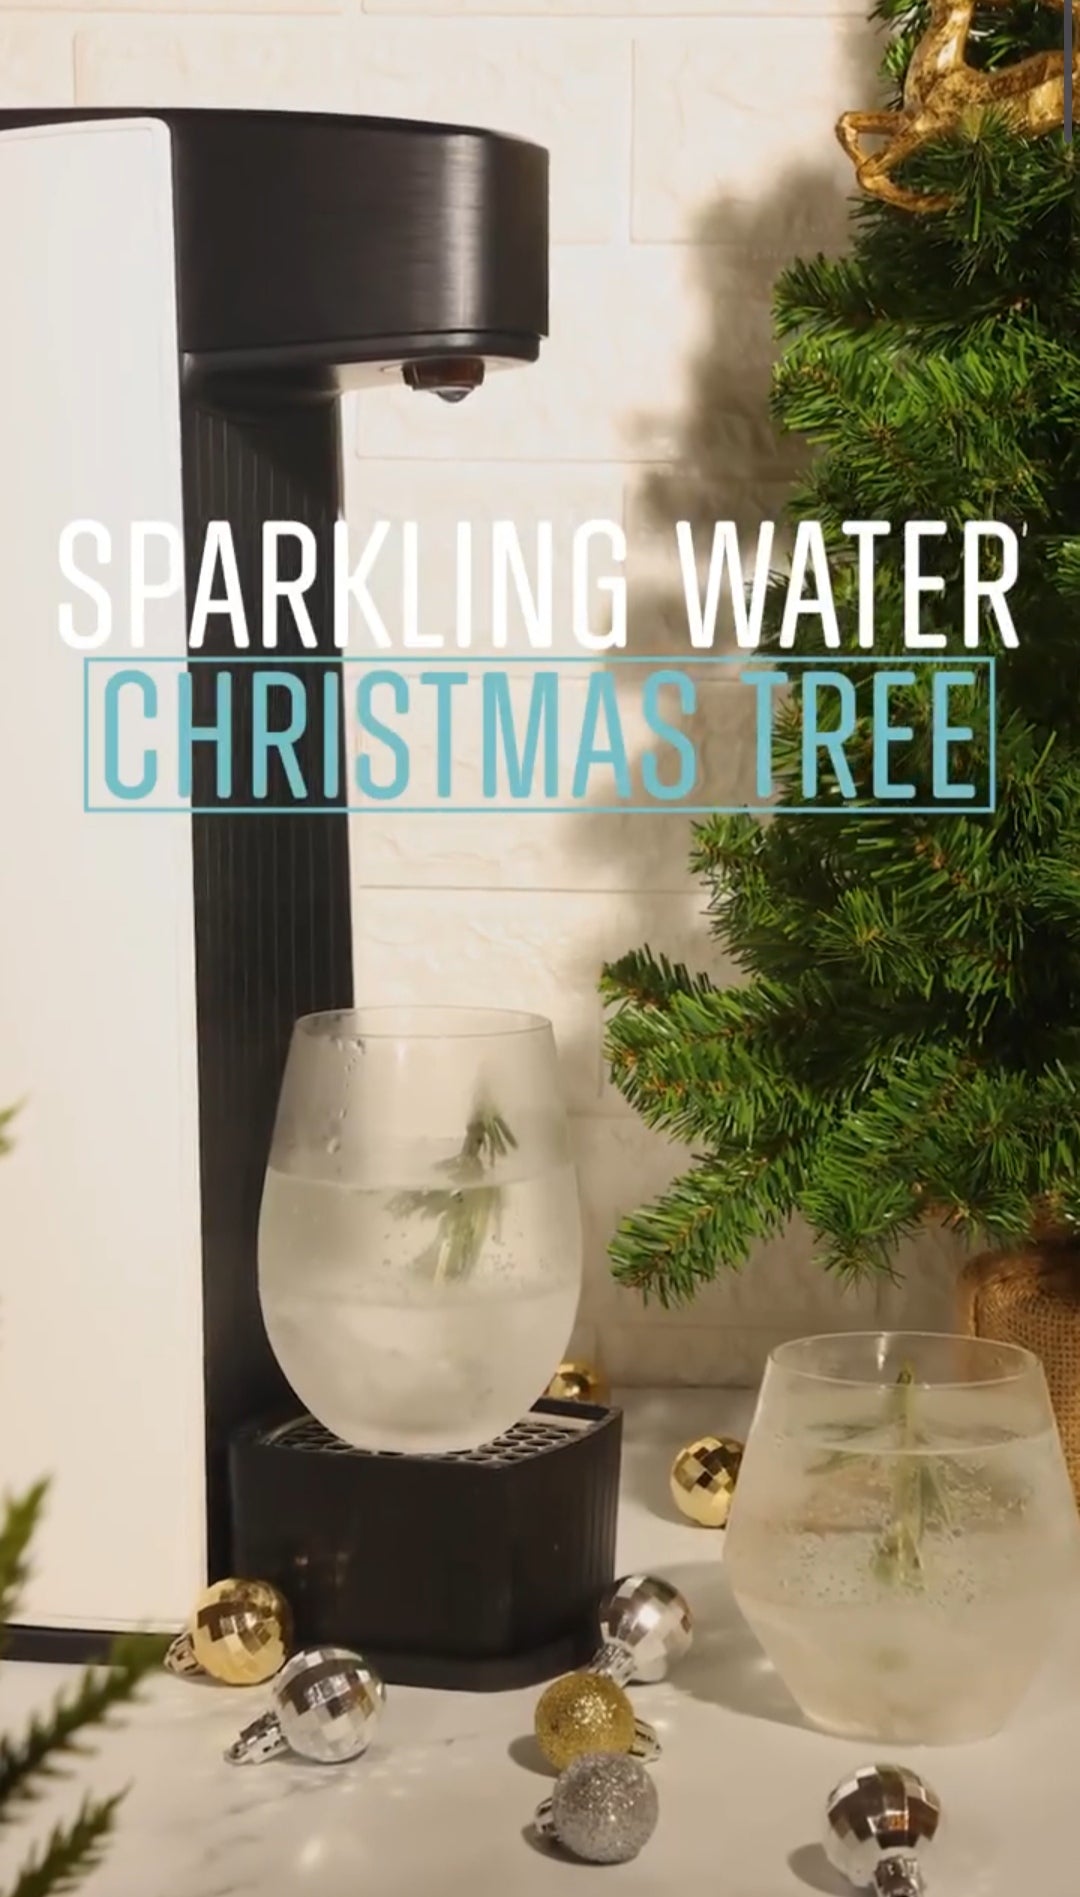 SPARKLING WATER CHRISTMAS TREE⁠